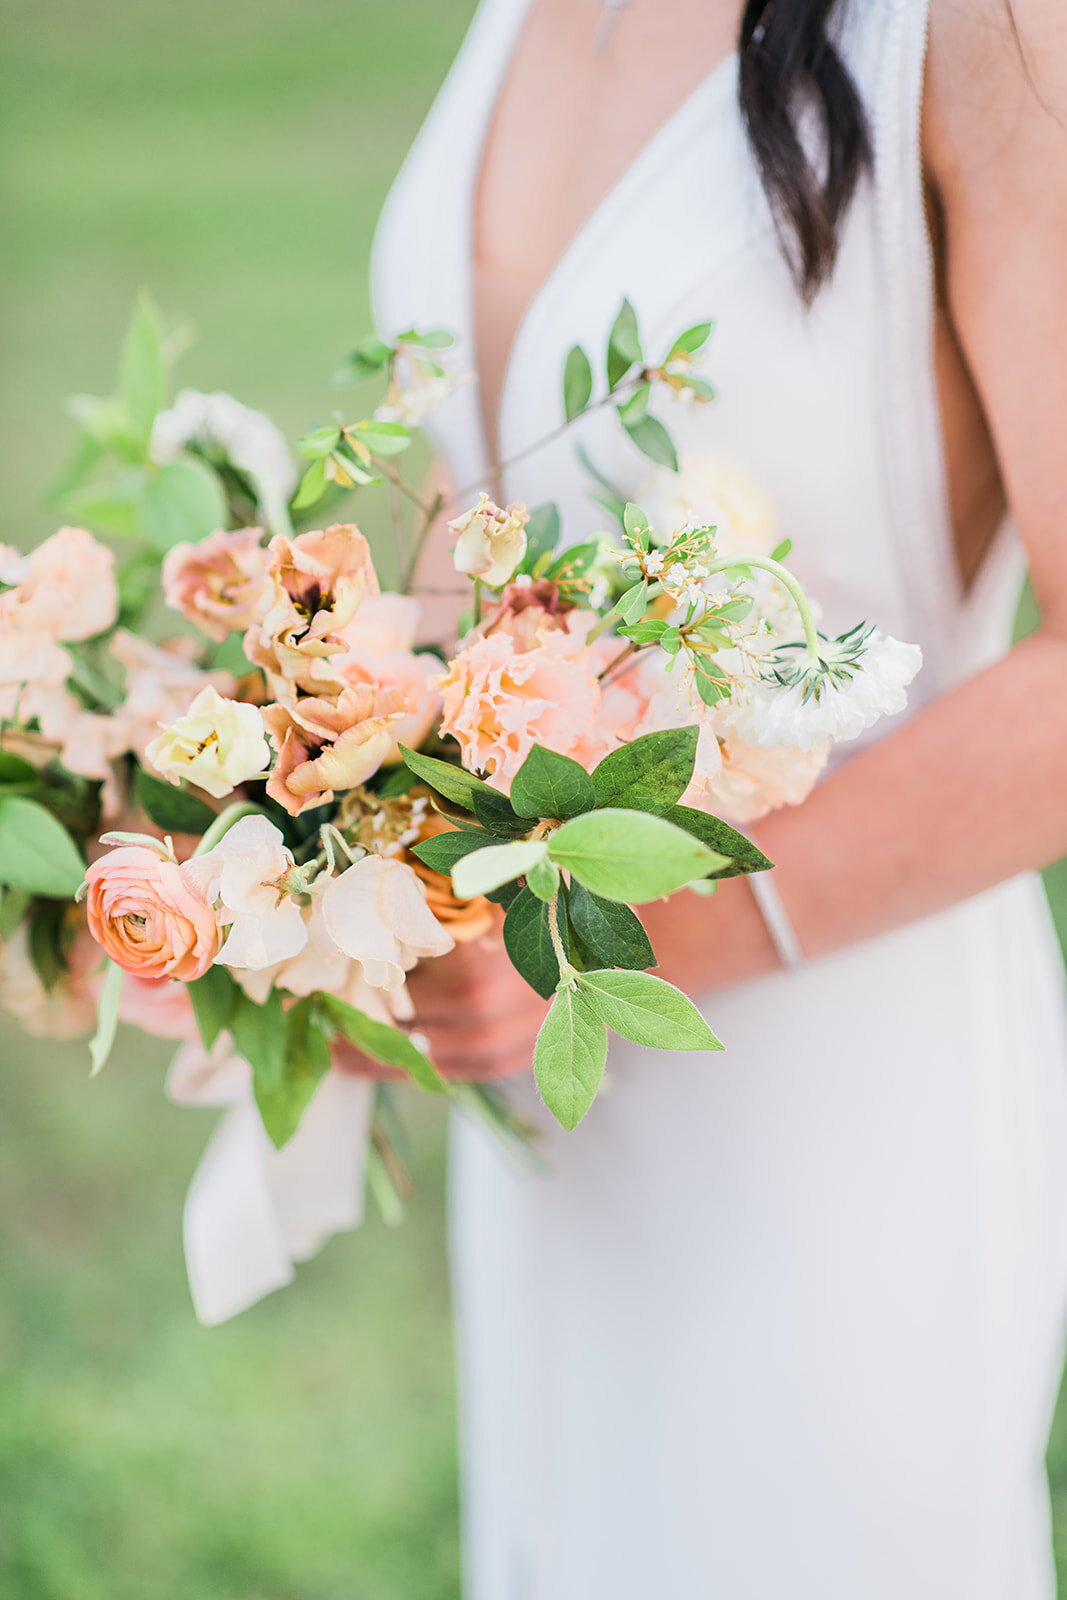 garden-style-peach-blush-ivory-bouquet-blush-floral-co-houston-texas-florist-kaiti-moyers-photography